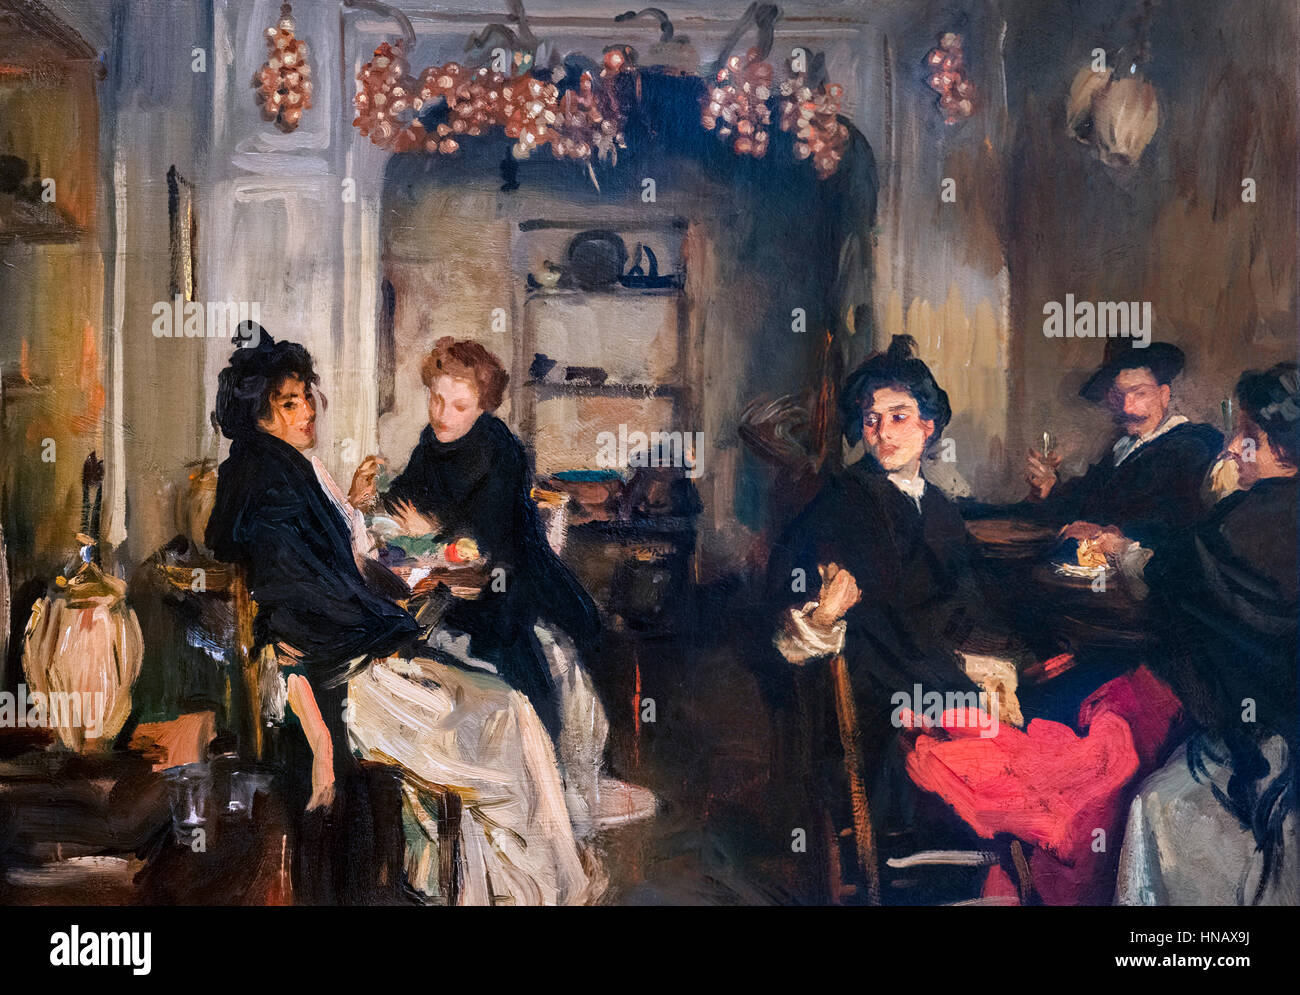 John Singer Sargent, peinture. 'Venetian Tavern' par John Singer SARGENT (1856-1925), huile sur toile, c.1902. Banque D'Images